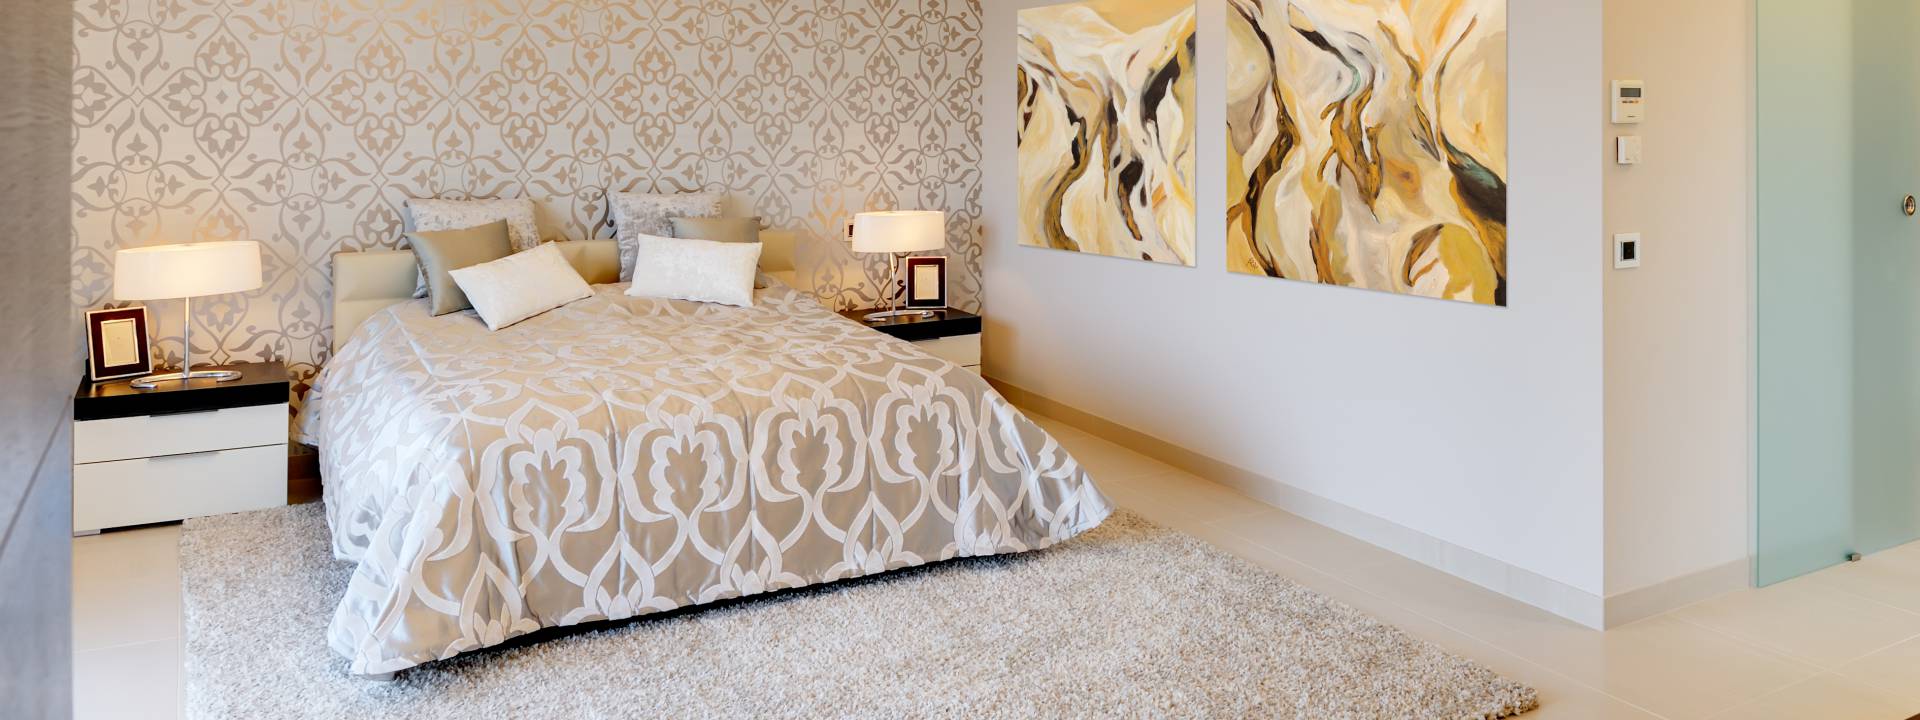 Modern villa Mallorca bedroom interior design 